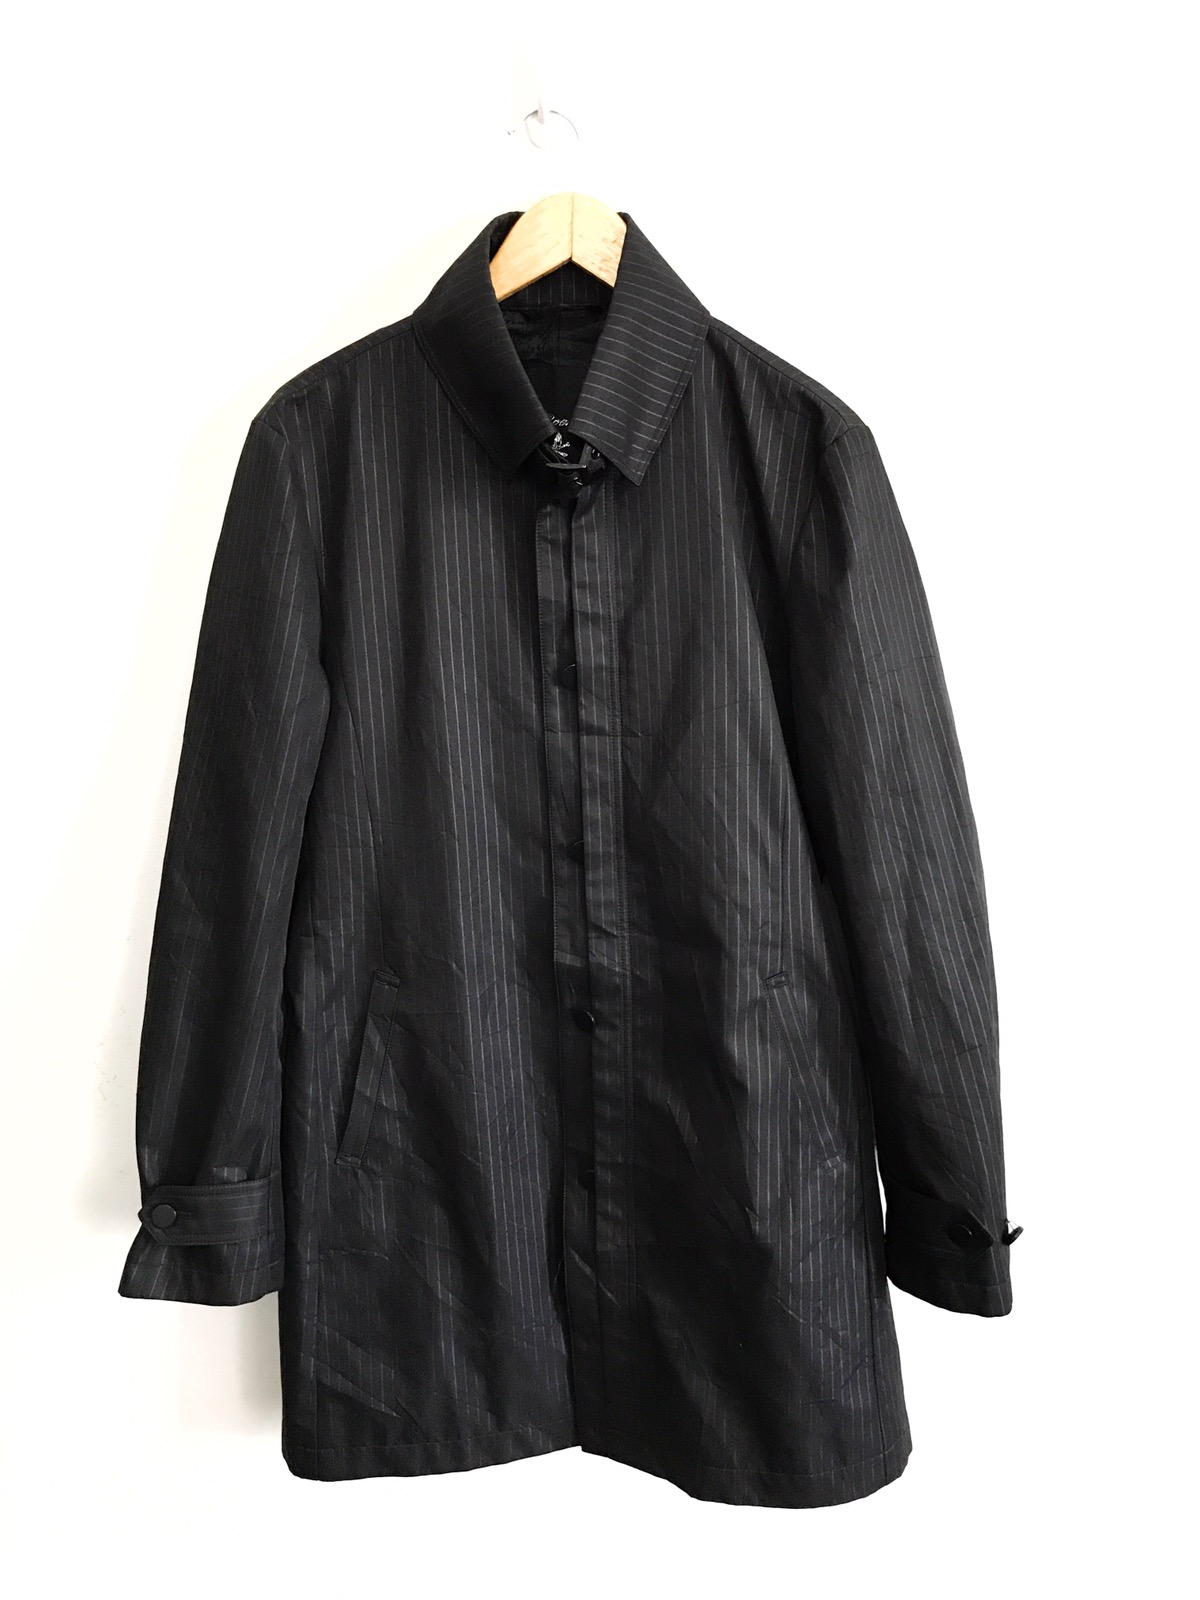 Japanese Brand Roen x Semantics Design Trench Coat Jacket - 1